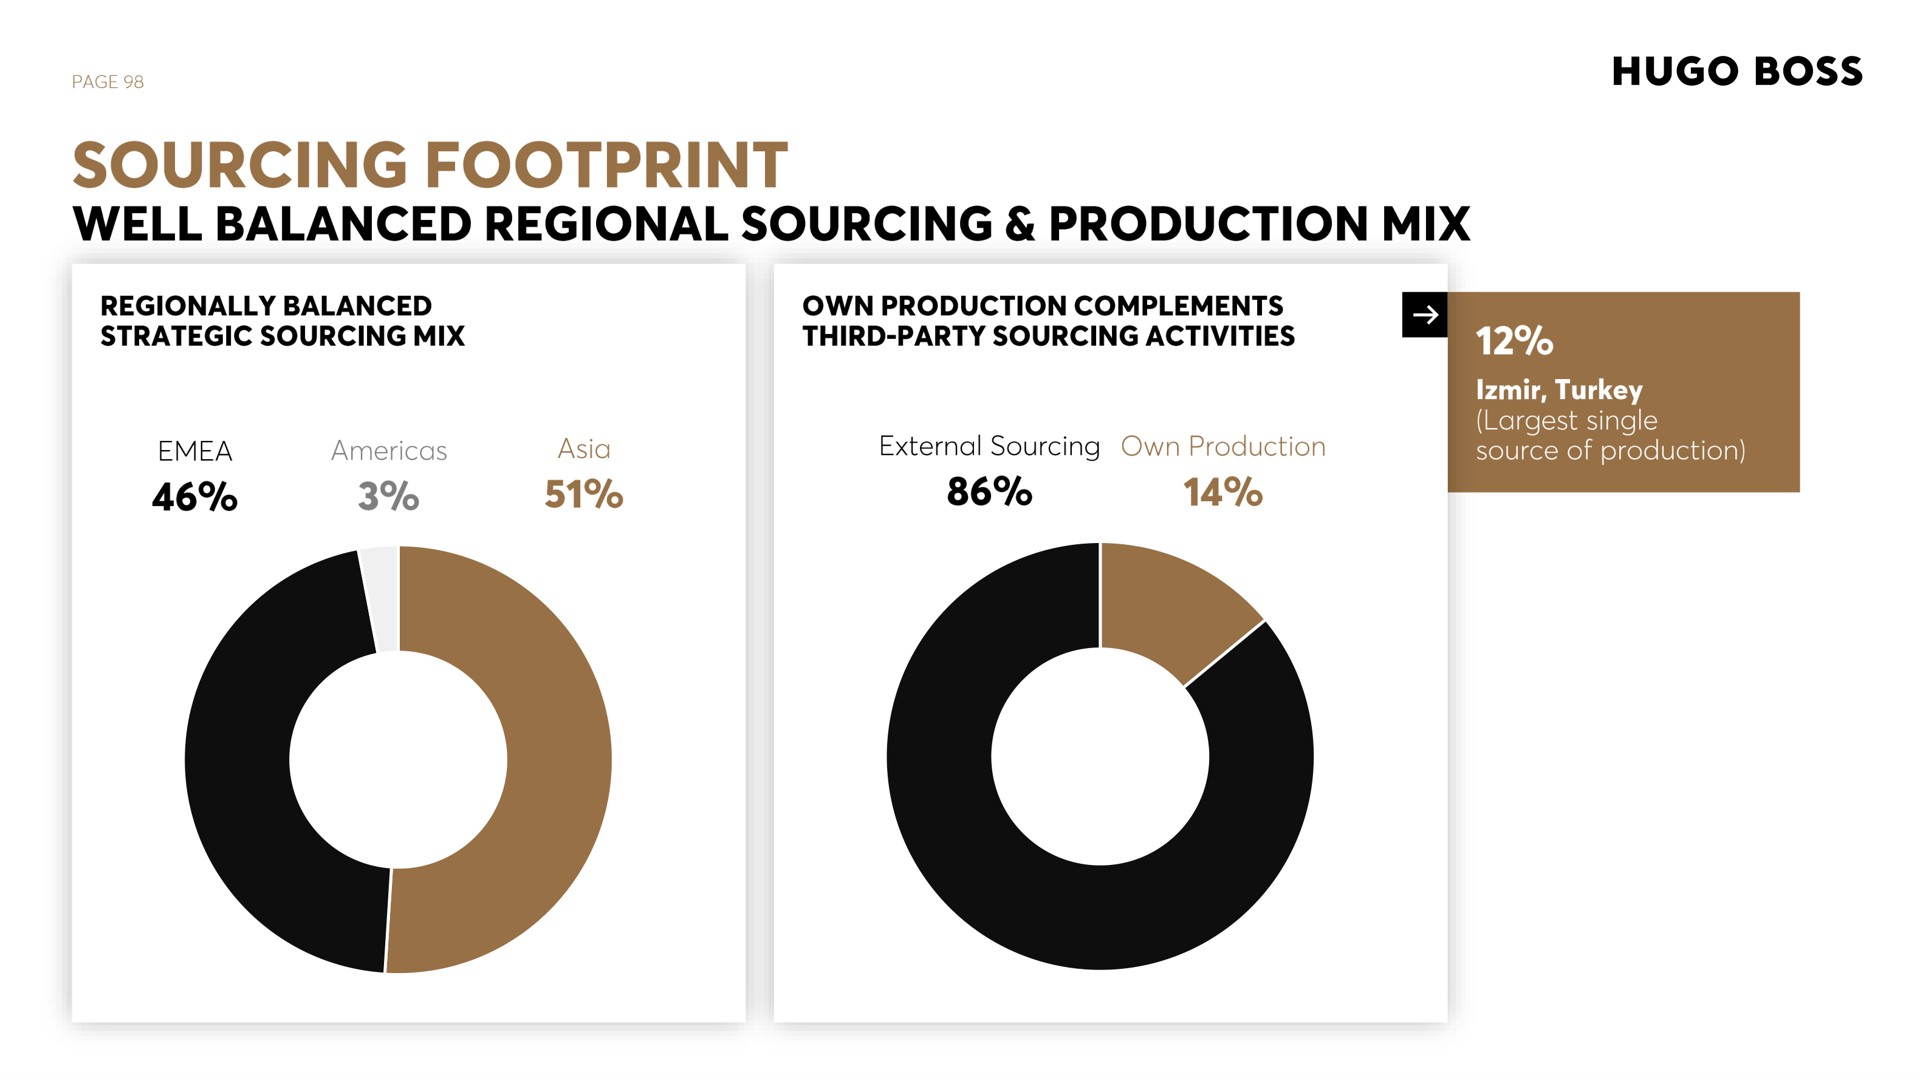 page boss sourcing footprint well balanced regional sourcing production mix | Hugo Boss